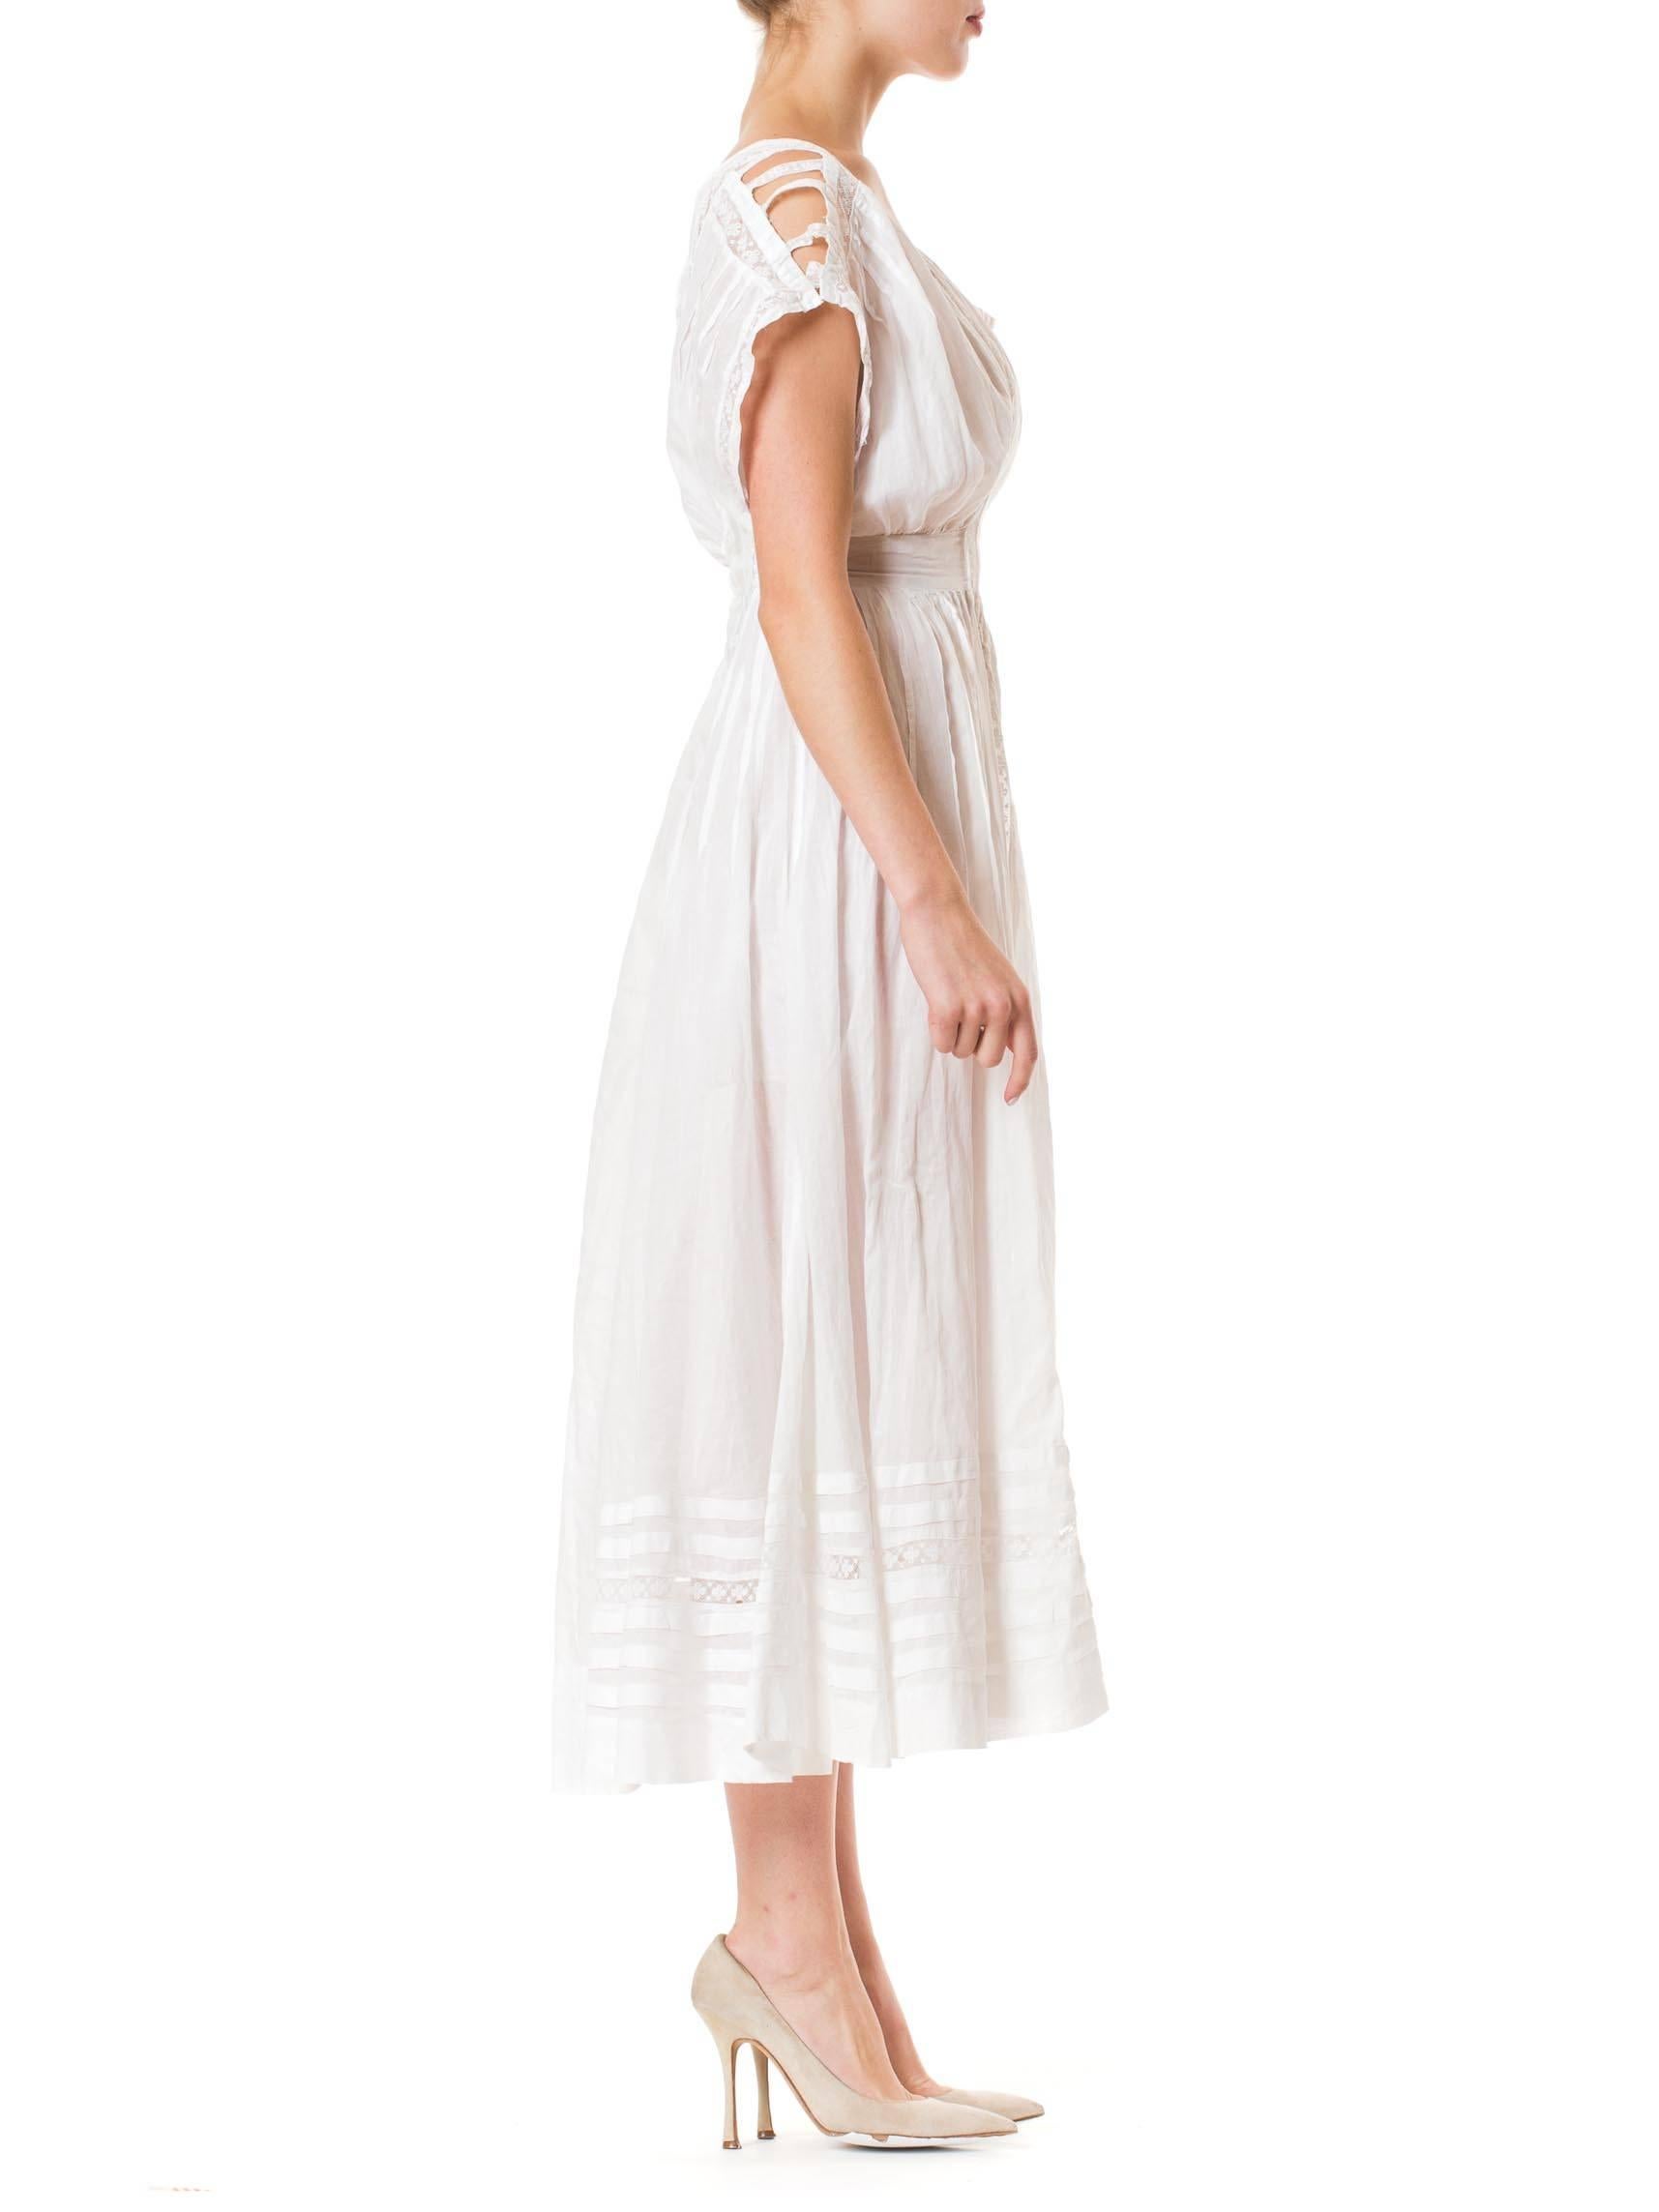 Gray Edwardian Cotton Batiste and Lace Dress